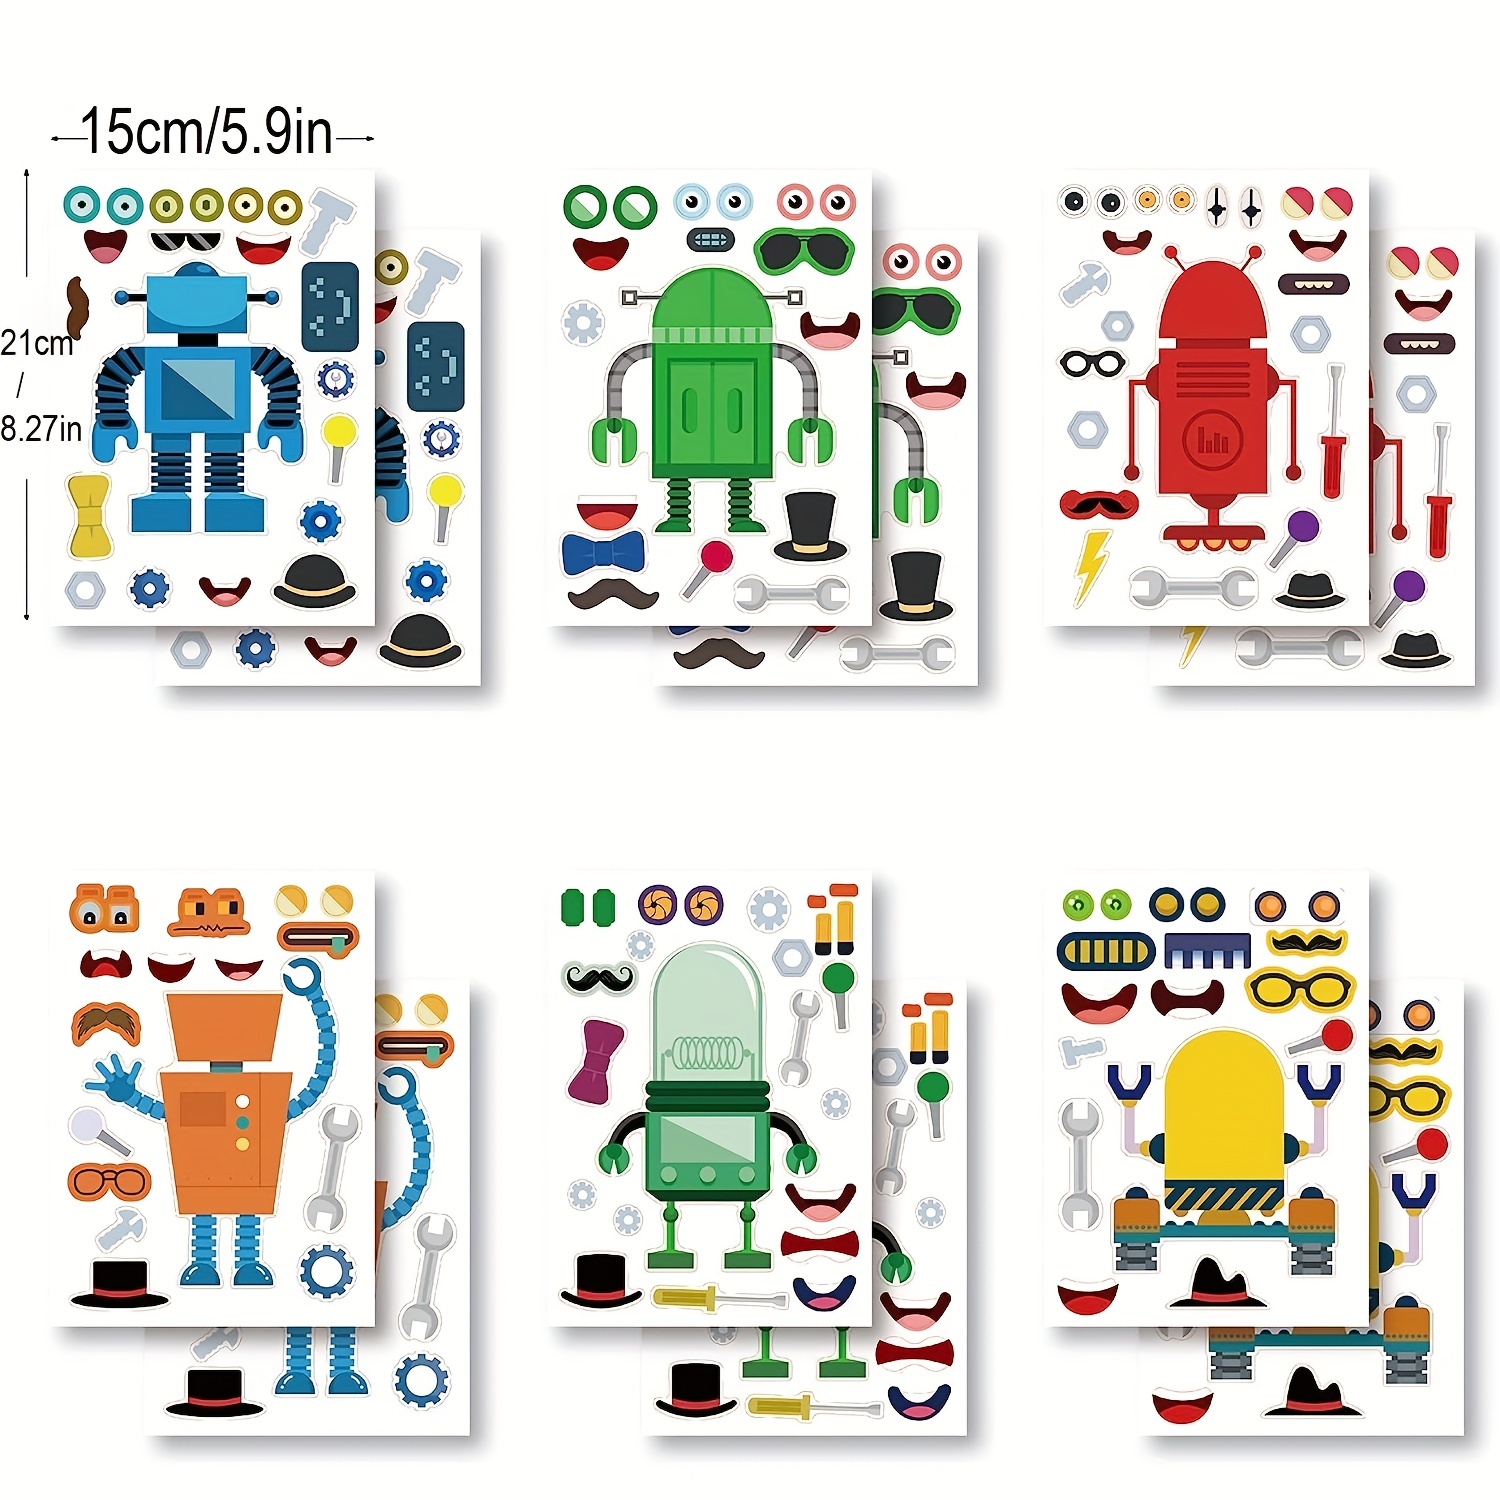 Printable Robots Stickers Paper craft  Sticker paper crafts, Paper crafts,  Robots art drawing